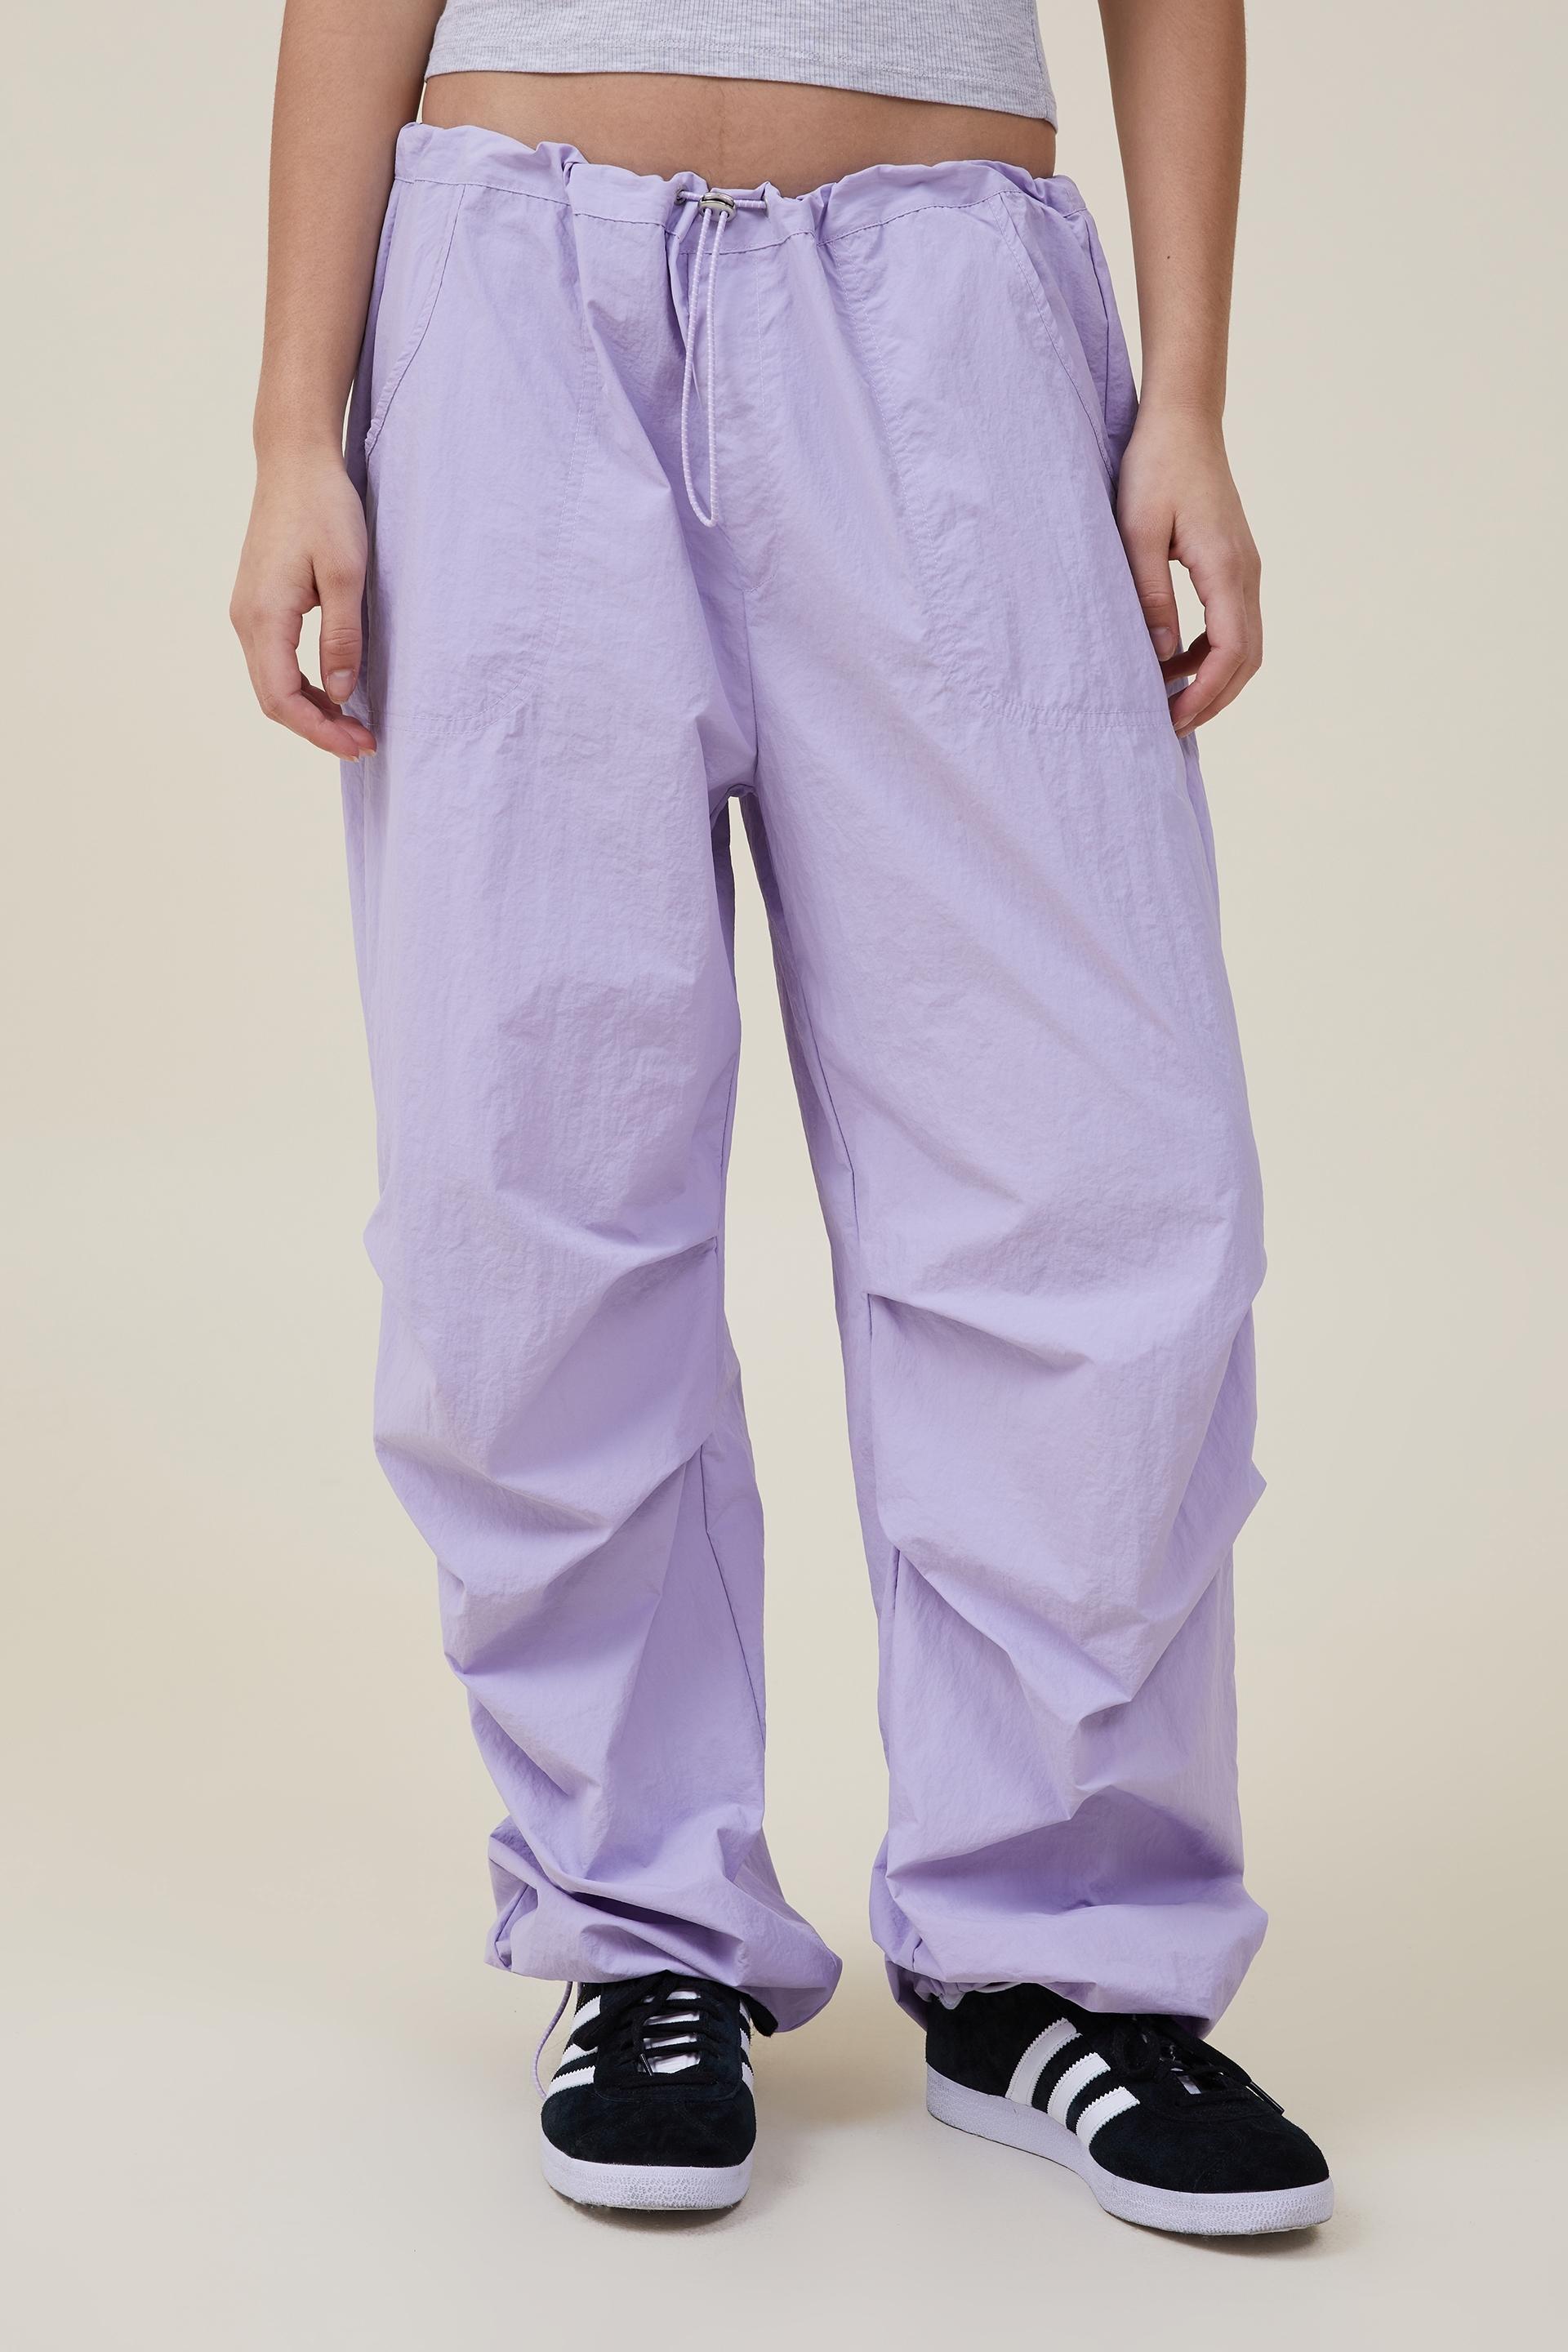 Jordan cargo pant - soft lilac Cotton On Trousers | Superbalist.com